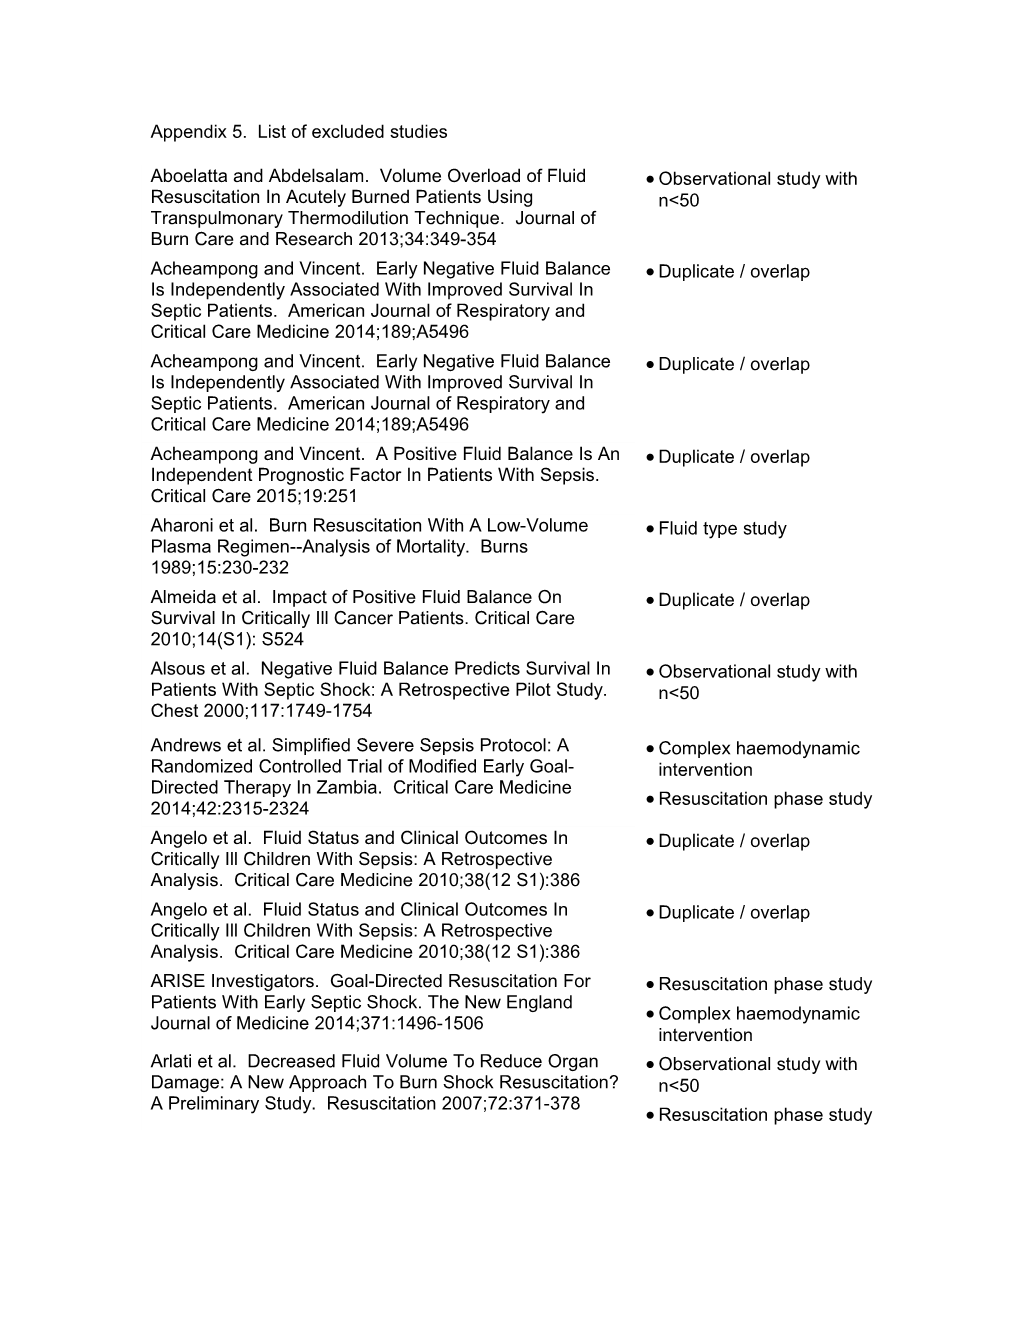 Appendix 5. List of Excluded Studies